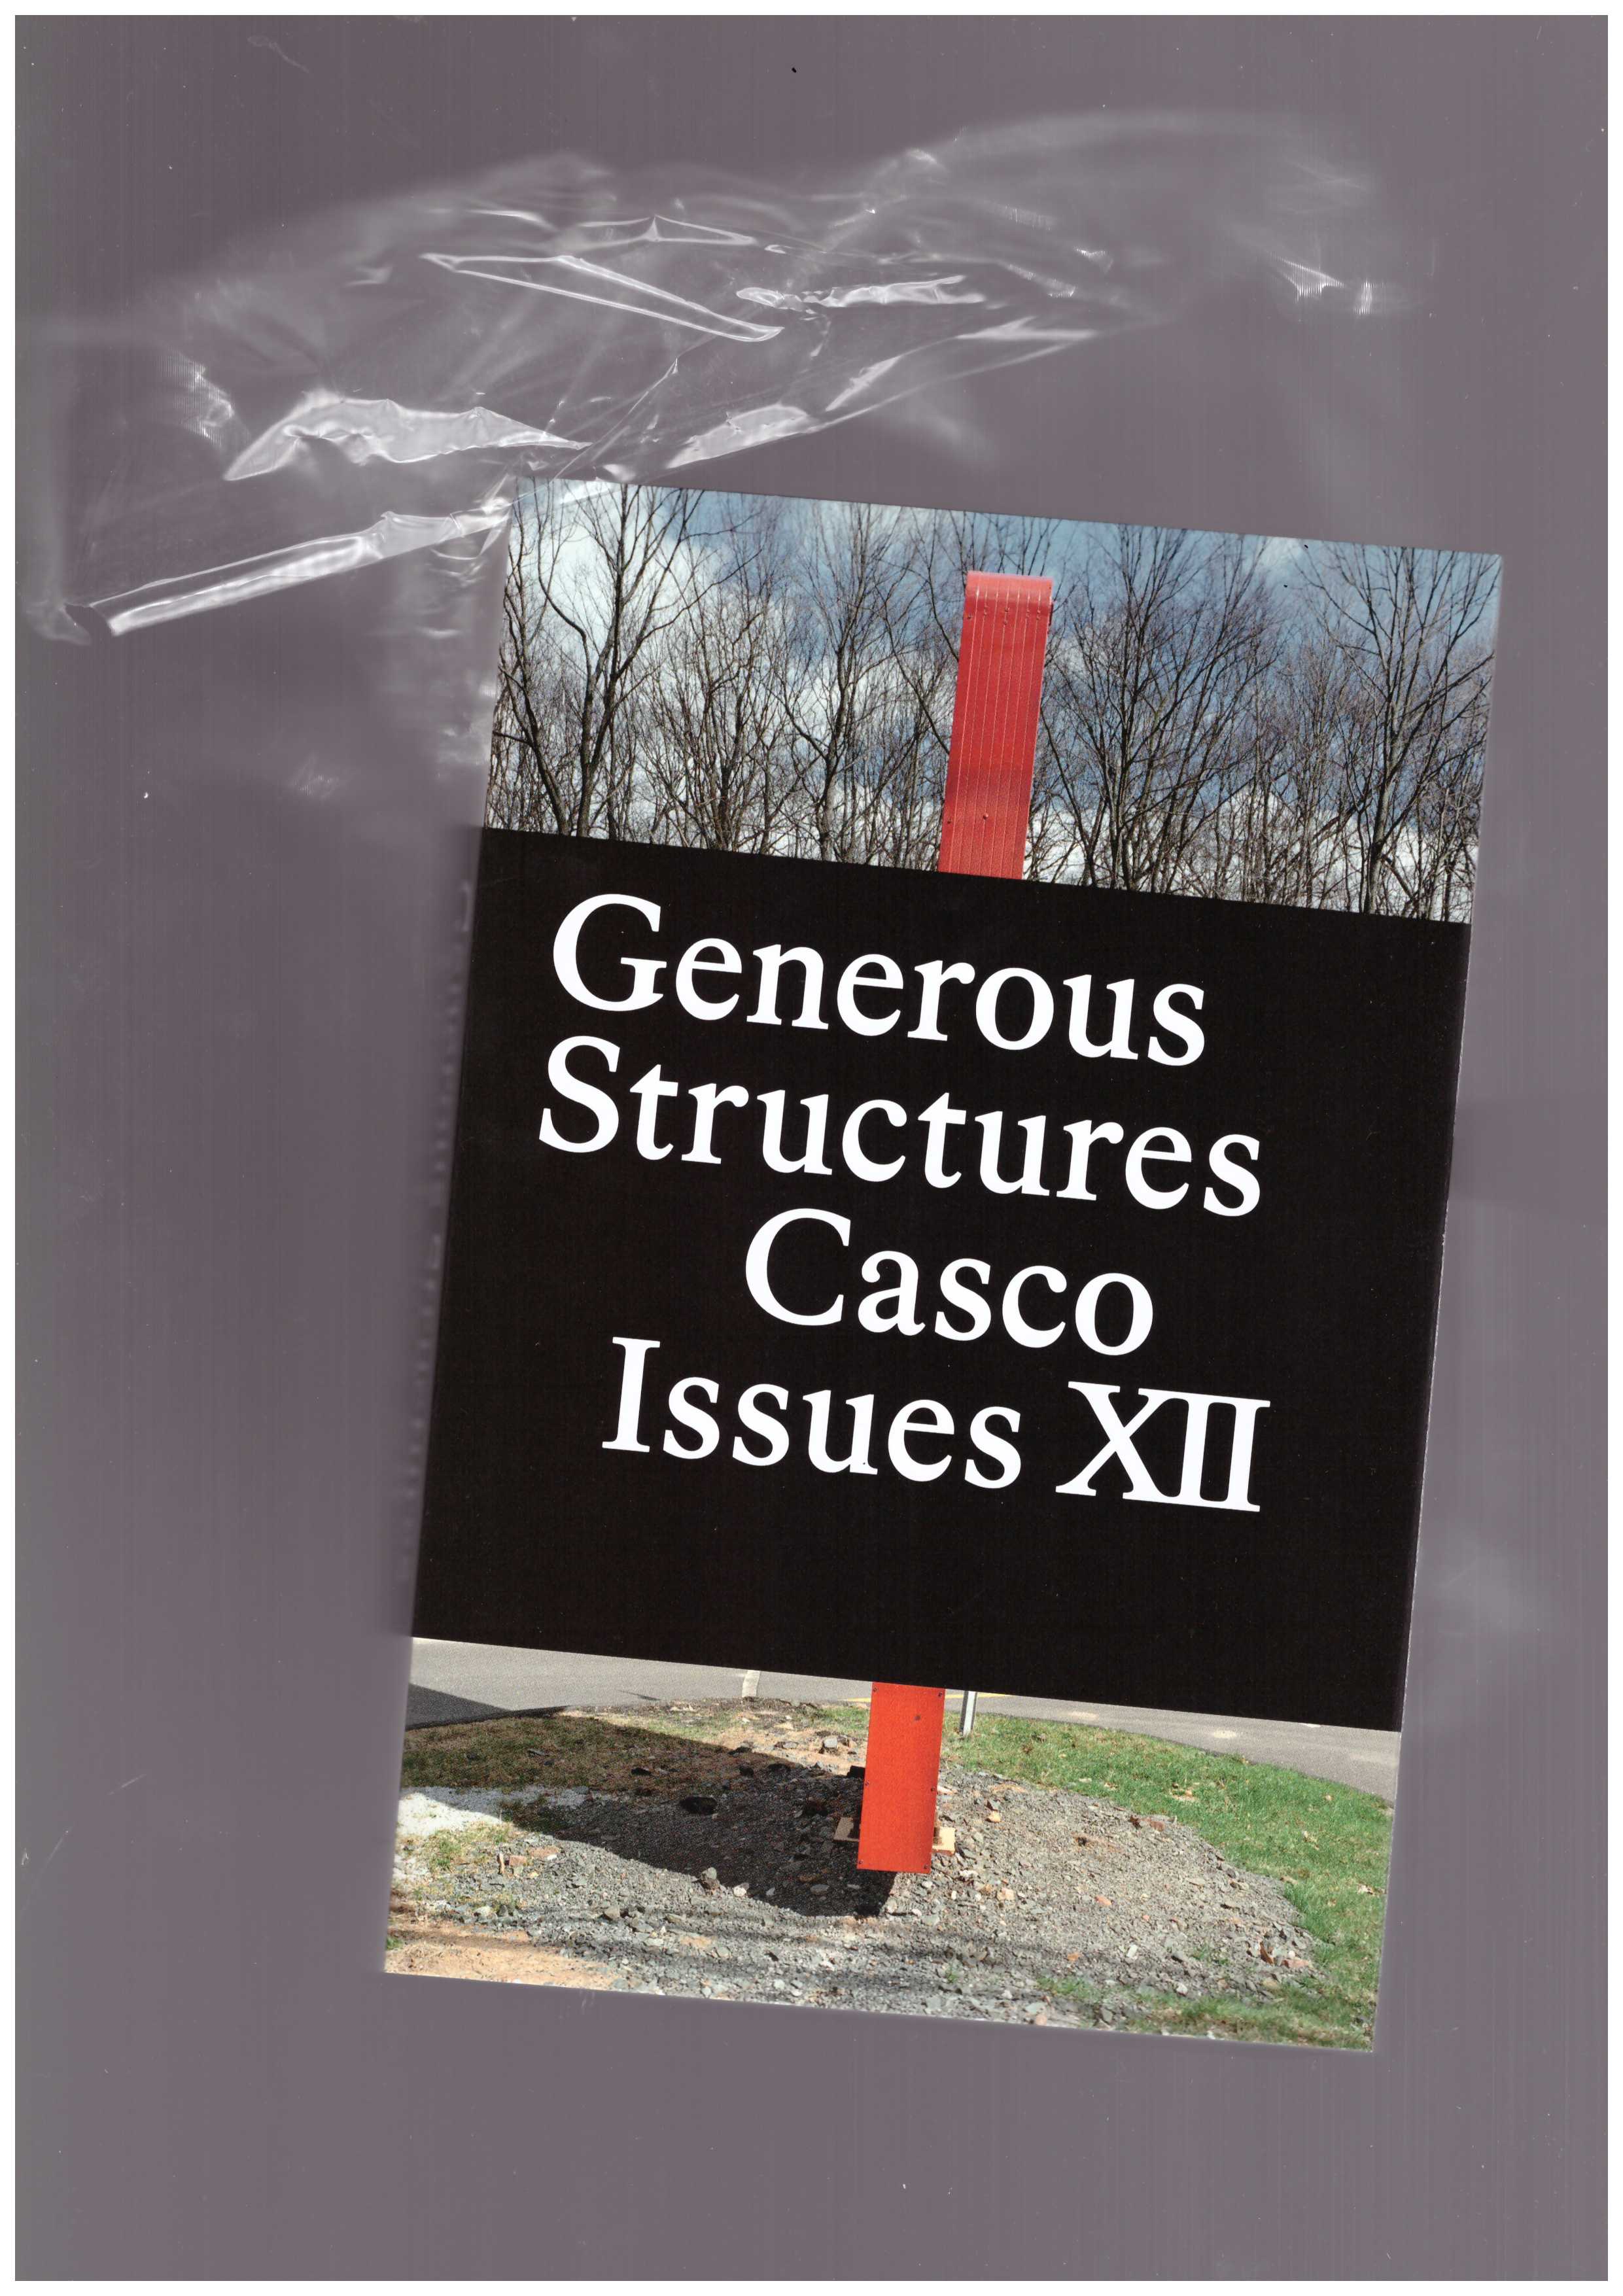 CHOI, Binna; WIEDER, Axel (eds.) - Casco Issues #12 - Generous Structures